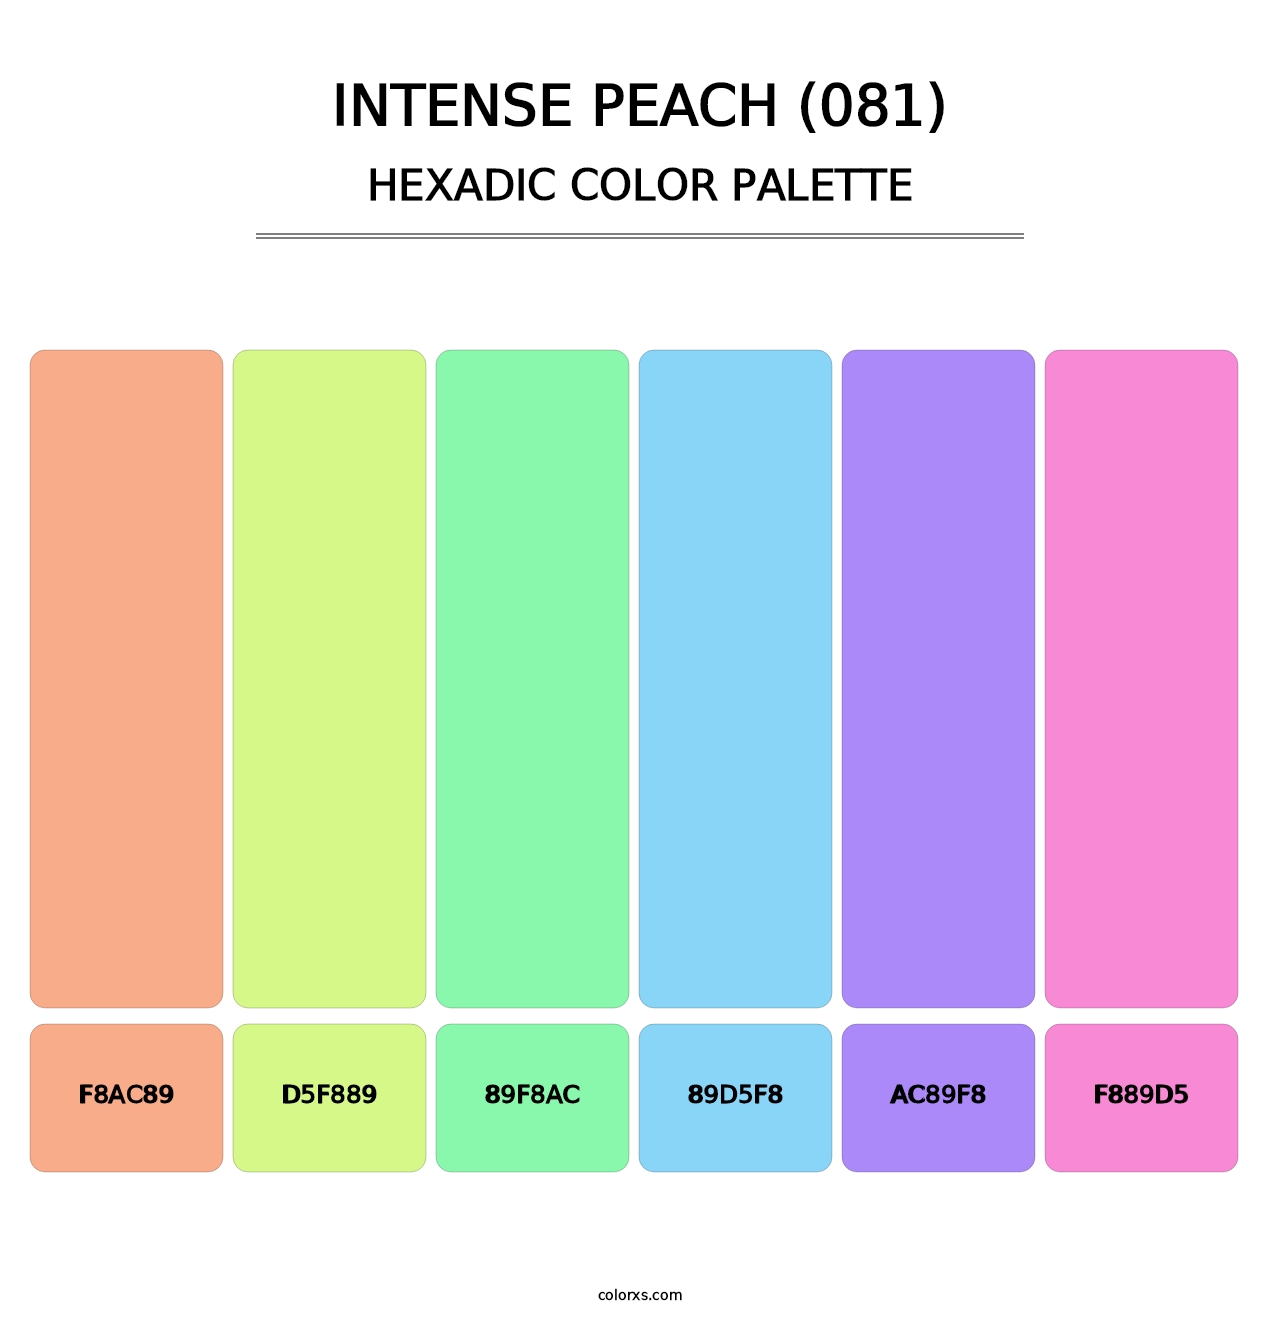 Intense Peach (081) - Hexadic Color Palette